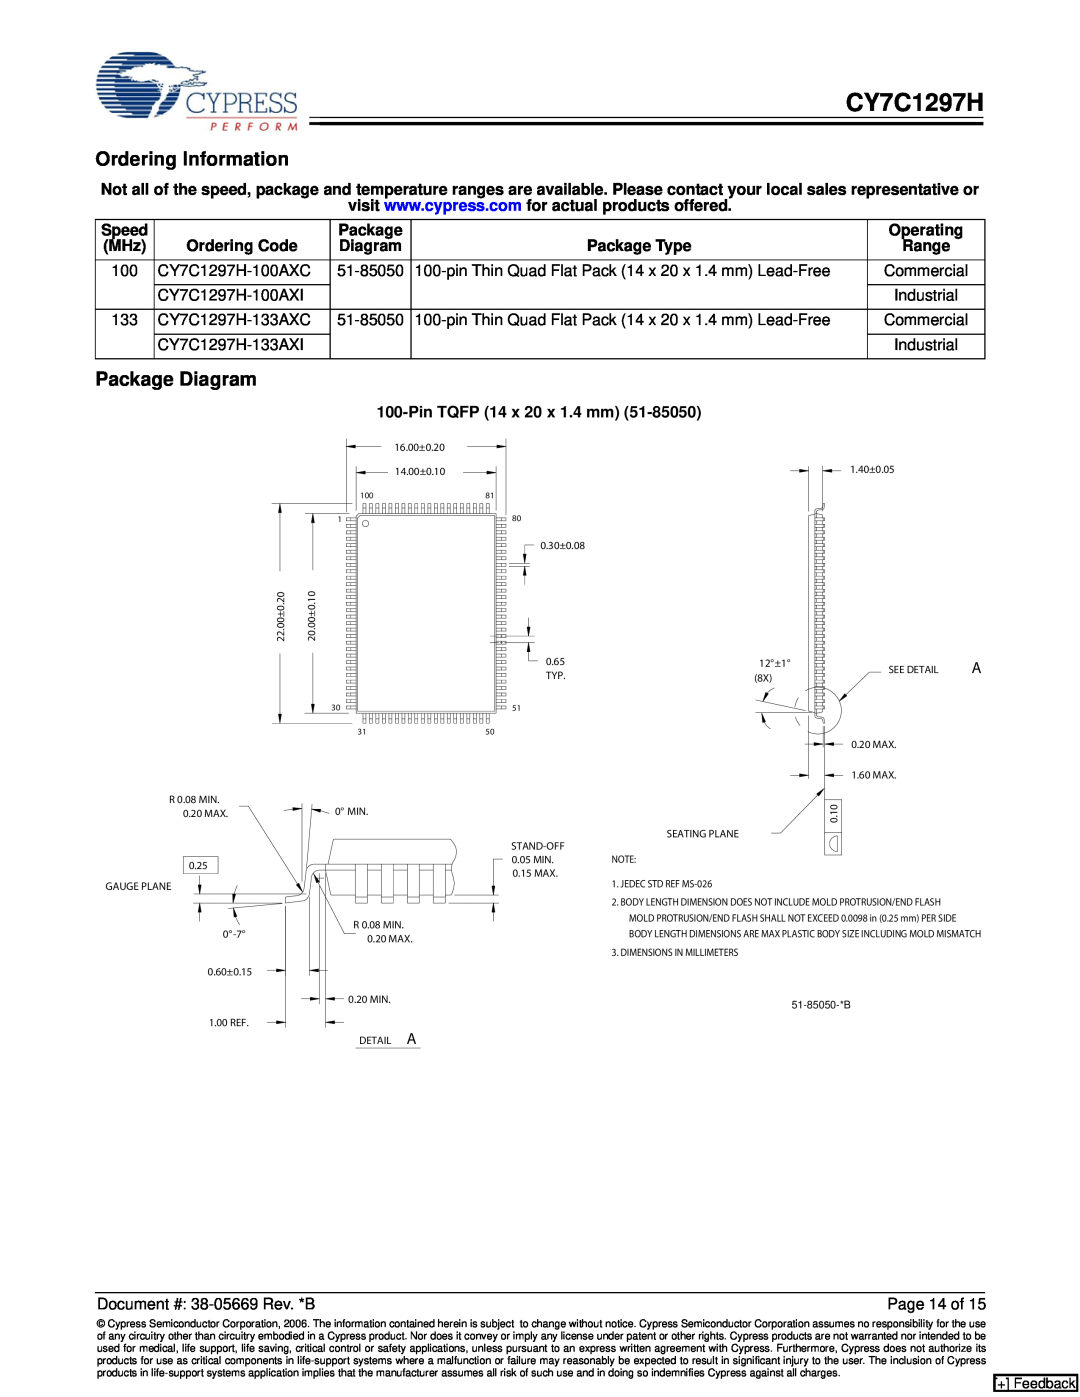 Cypress CY7C1297H manual Ordering Information, Package Diagram 